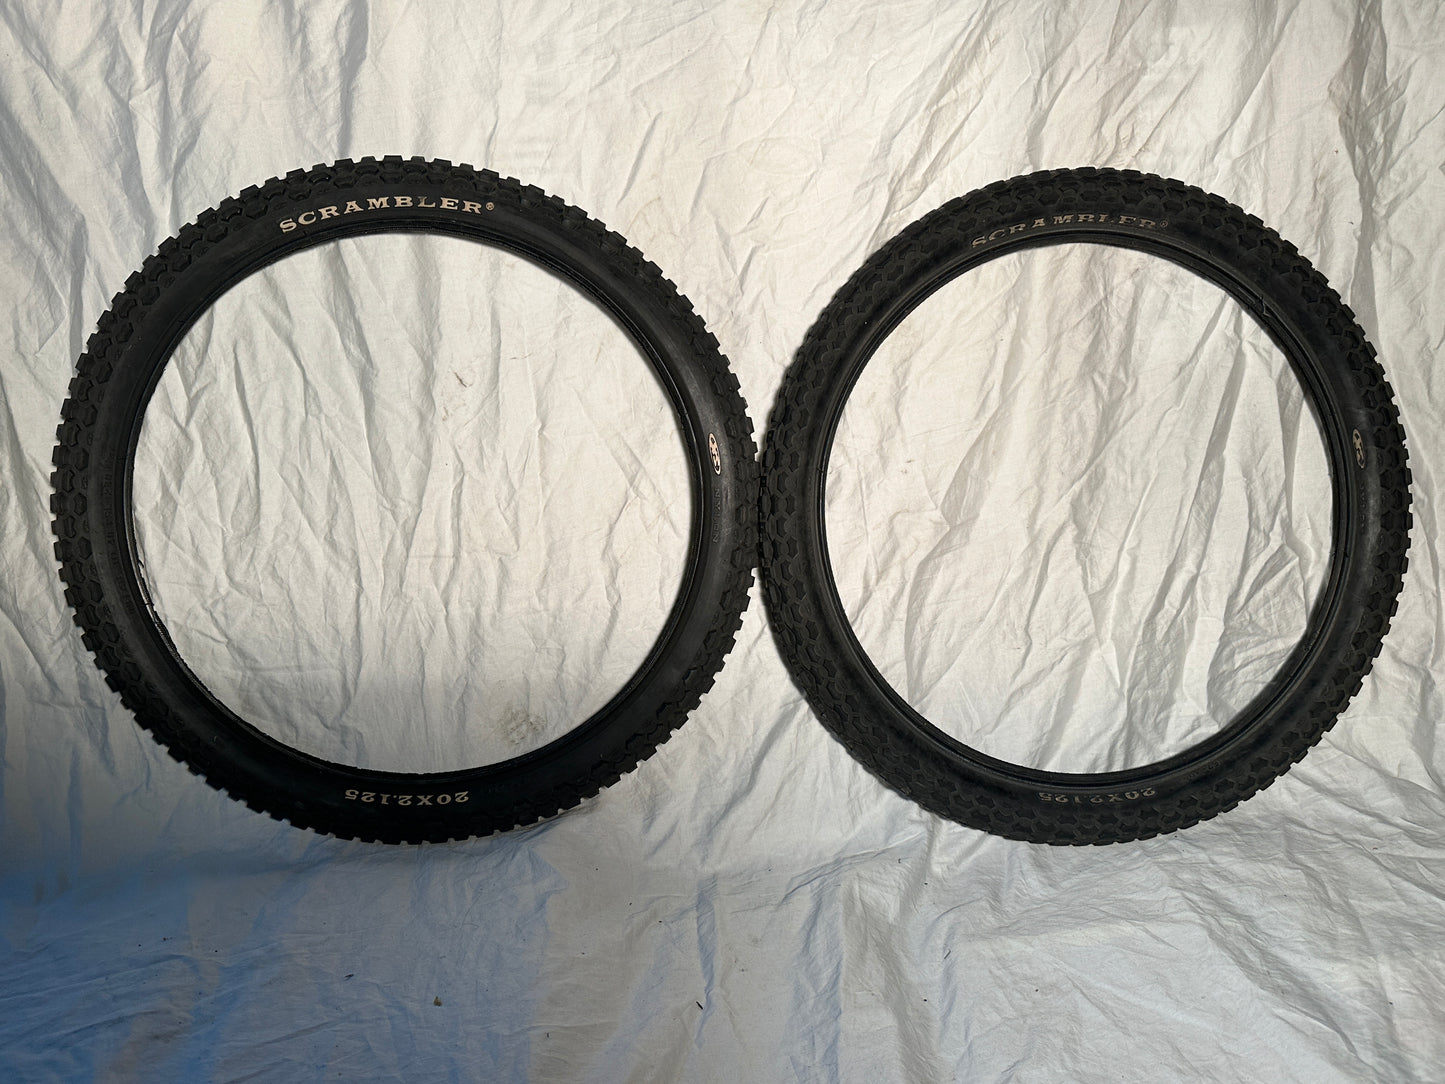 Used Schwinn XS Scrambler Dirt Tire 20x2.125 (Pair)